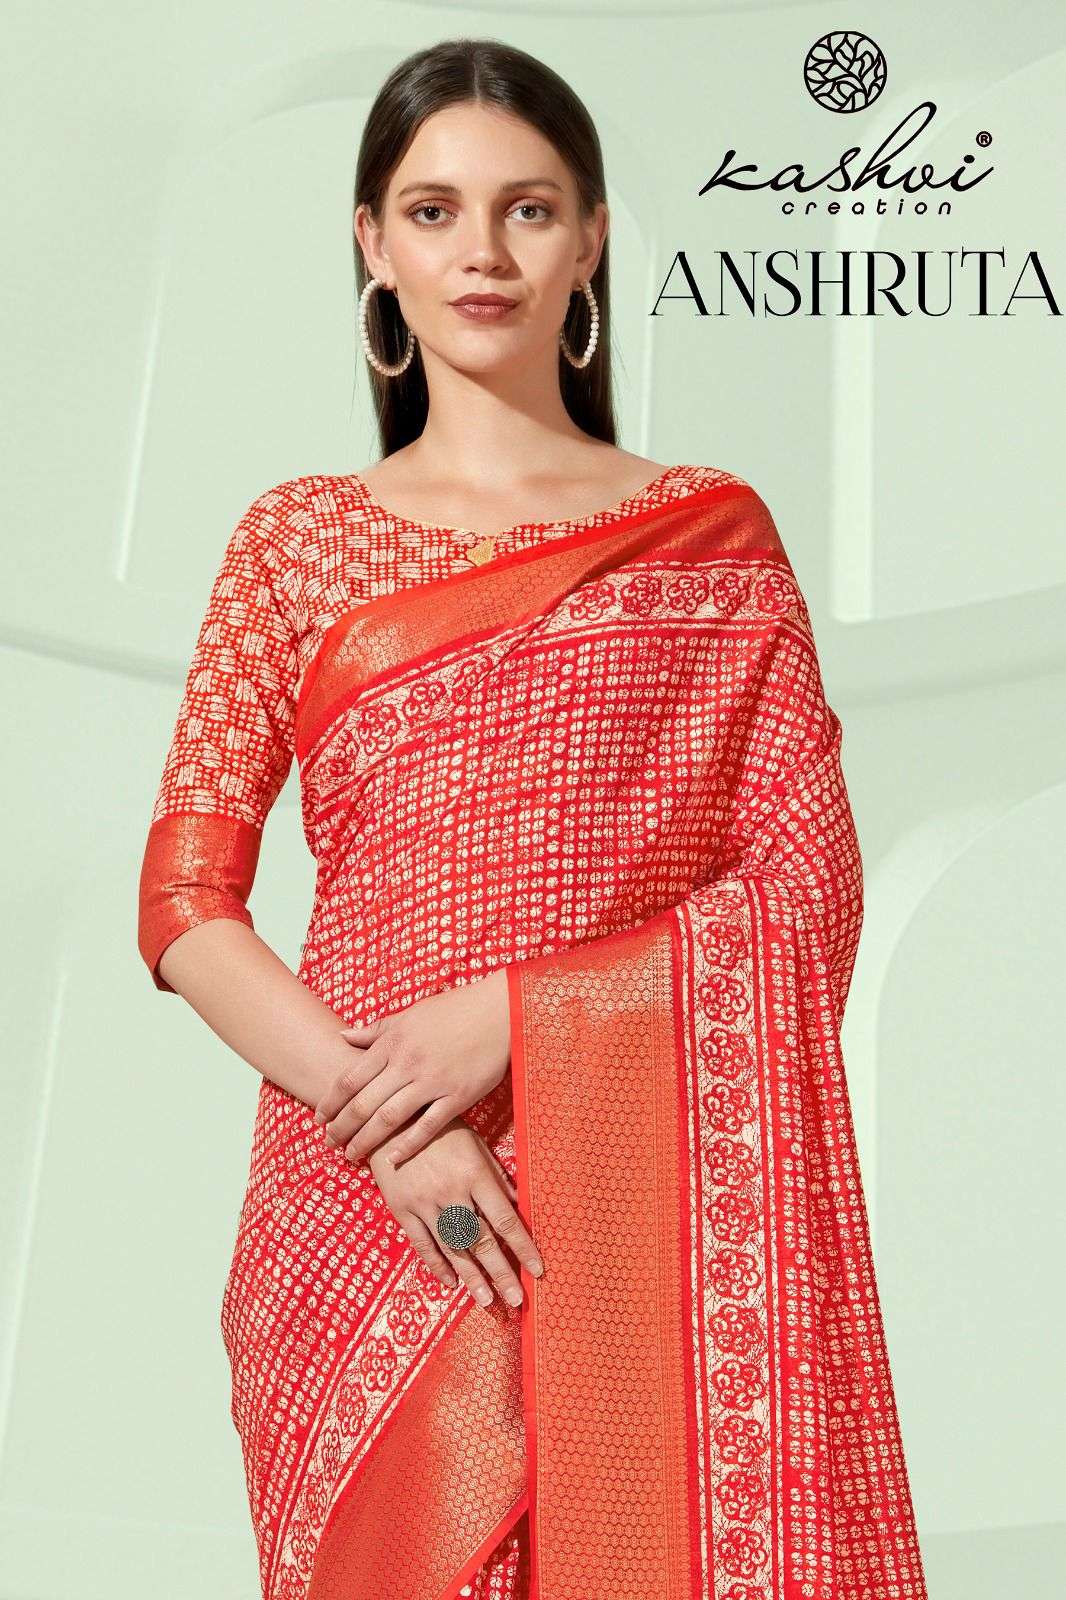 kashvi creation launch anshruta adorable print saree collection